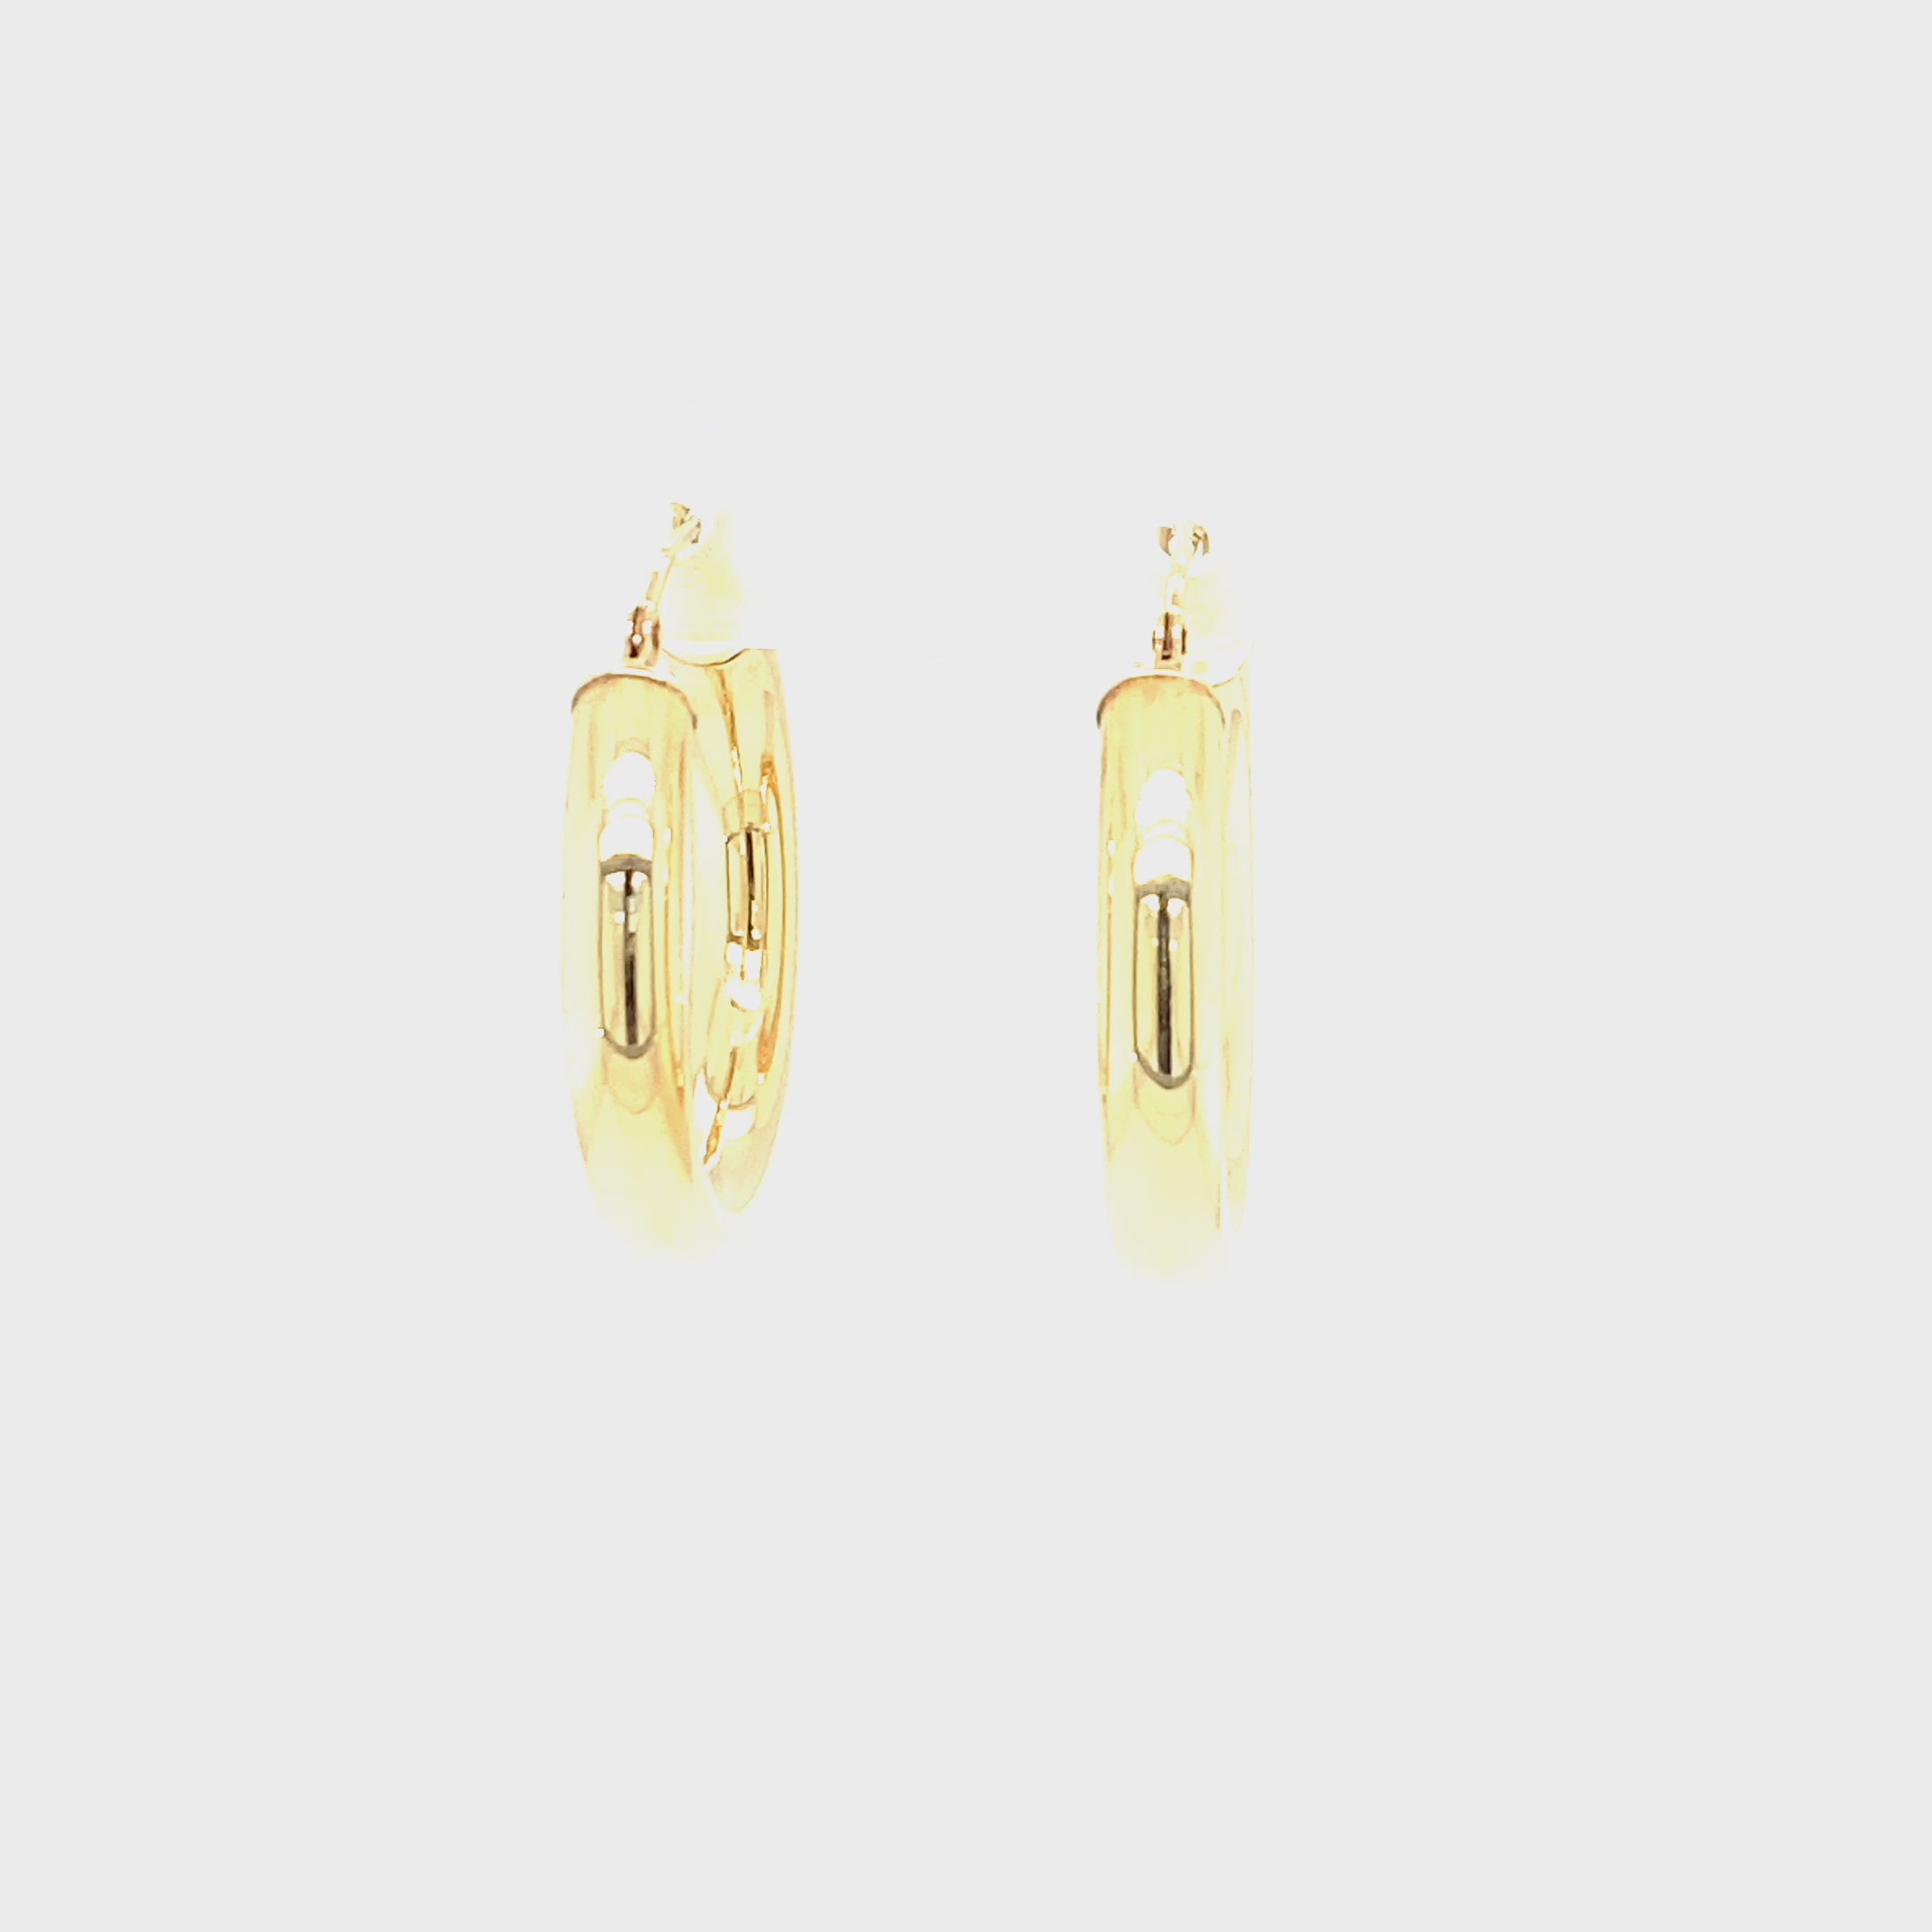 14K Solid Gold 4mm Hoop Earrings Gold Hoops Gold Earrings Shiny Hoops Polished Hoops Statement Earrings Vintage Earrings Estate Jewellery